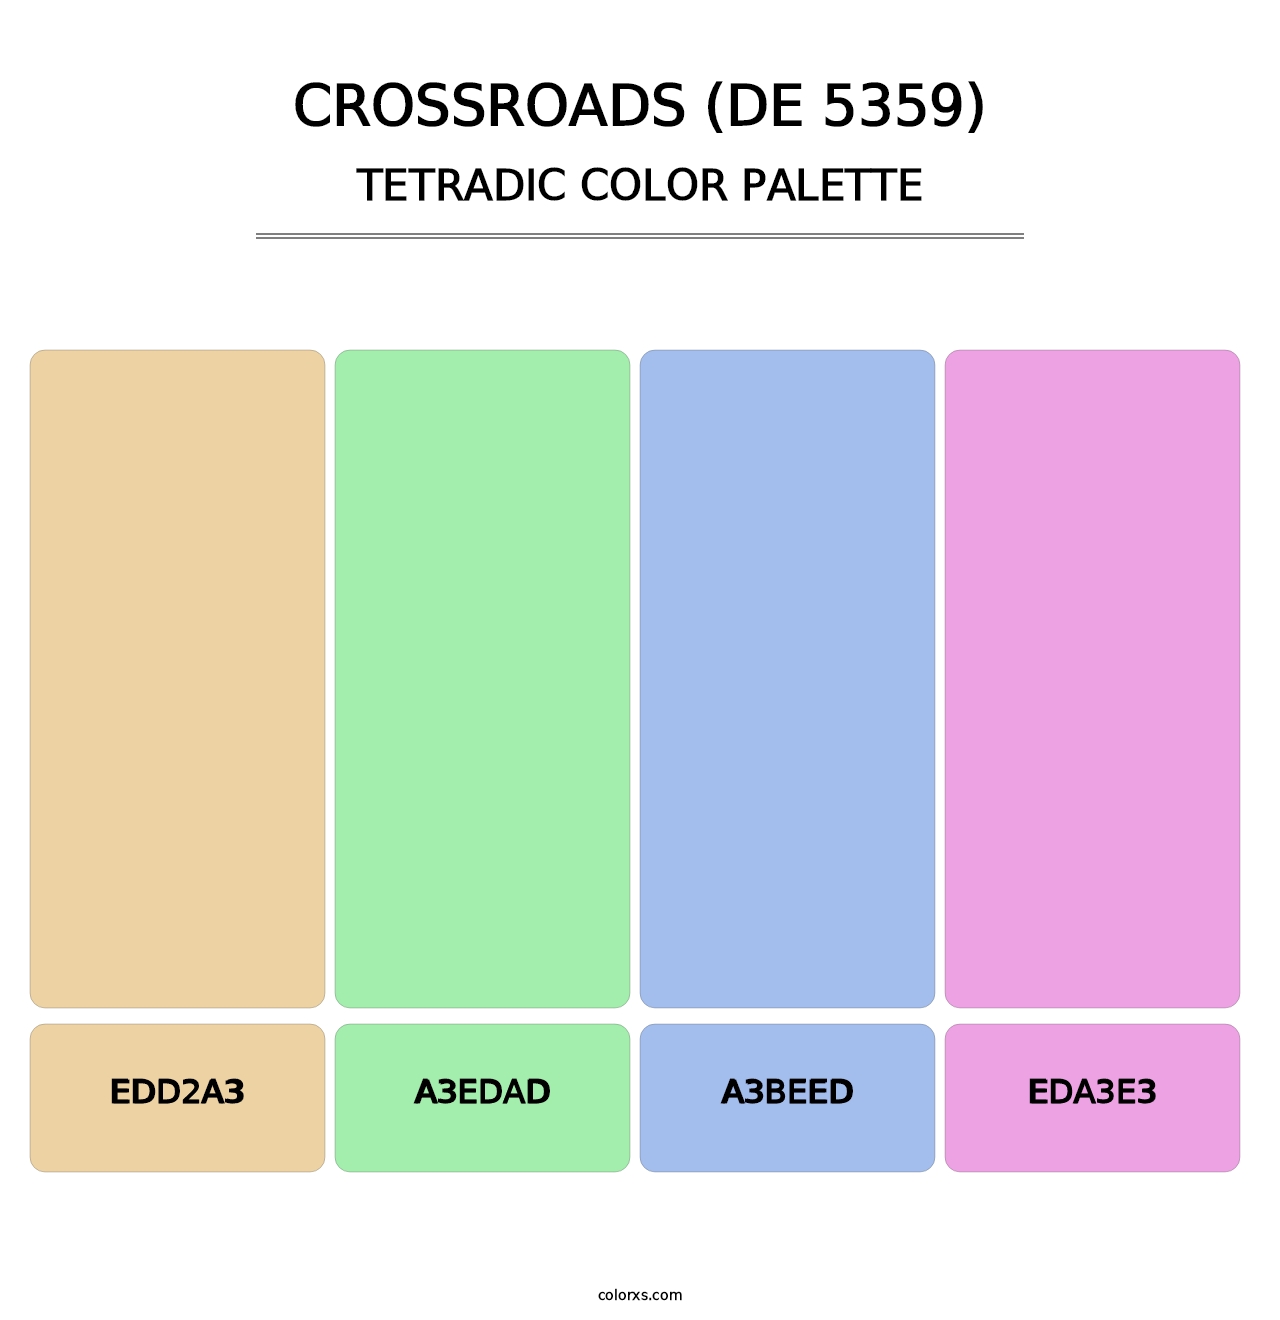 Crossroads (DE 5359) - Tetradic Color Palette